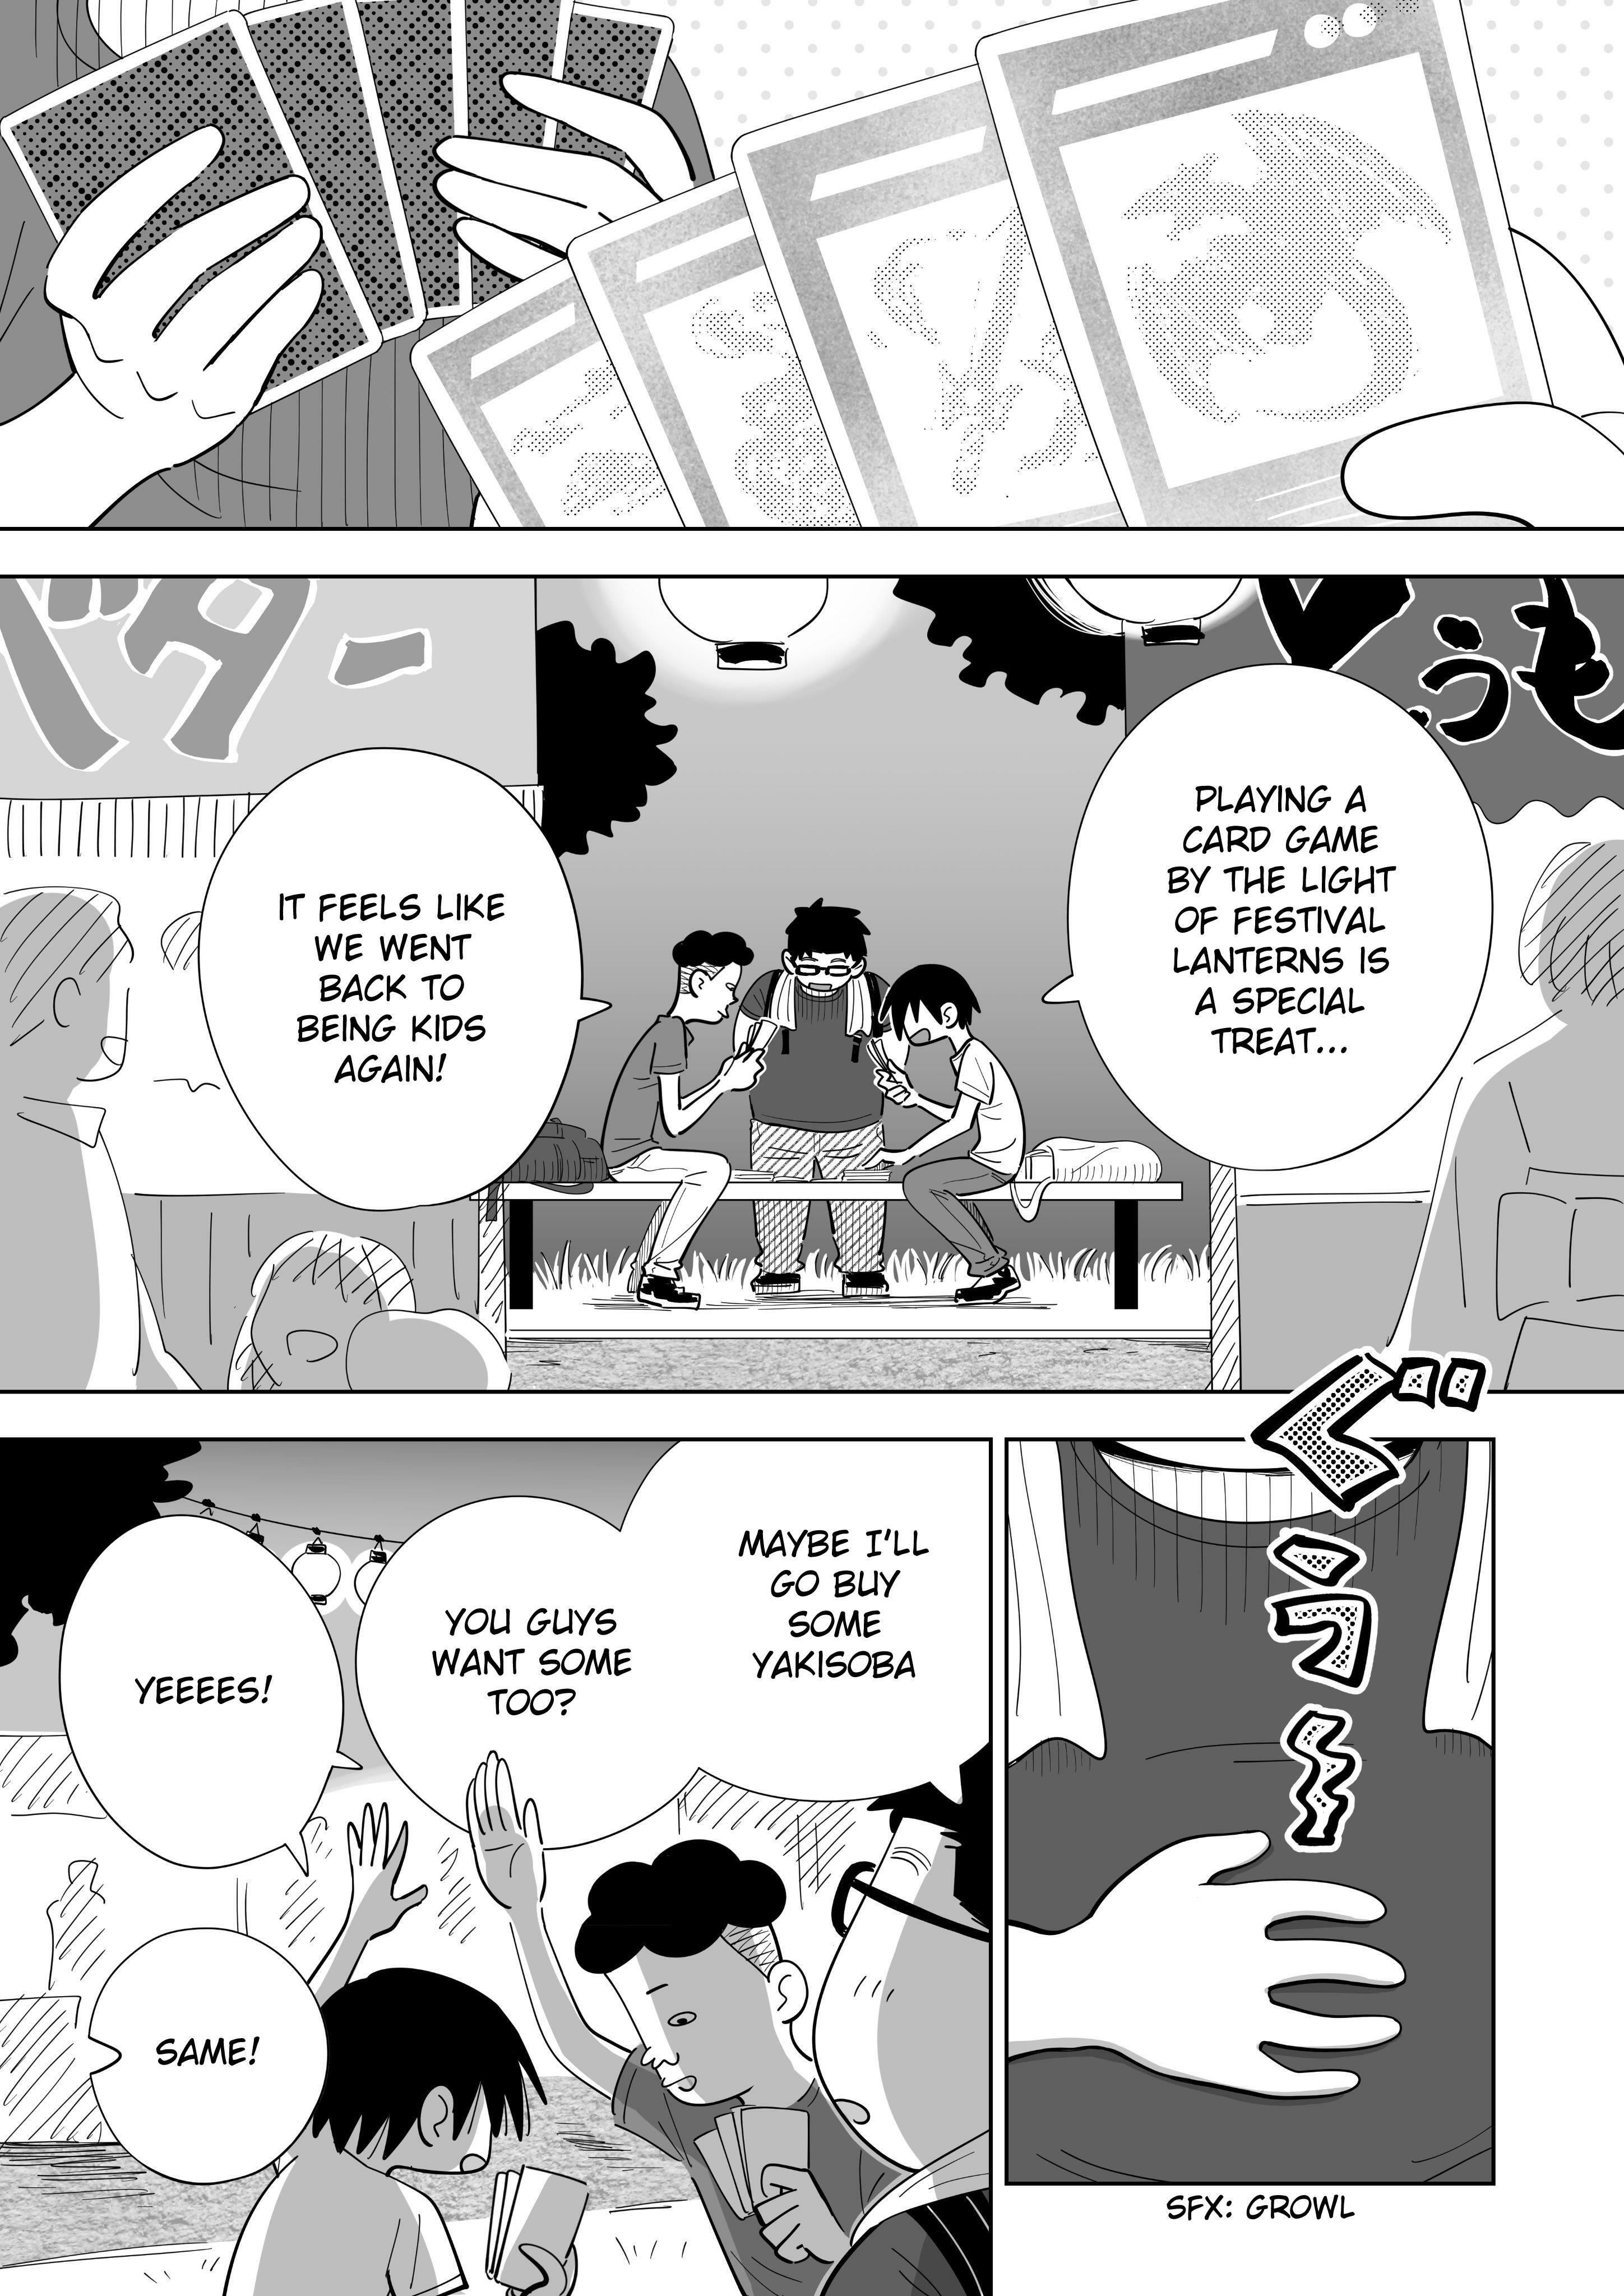 Read Just One Bite! Chapter 21 on Mangakakalot